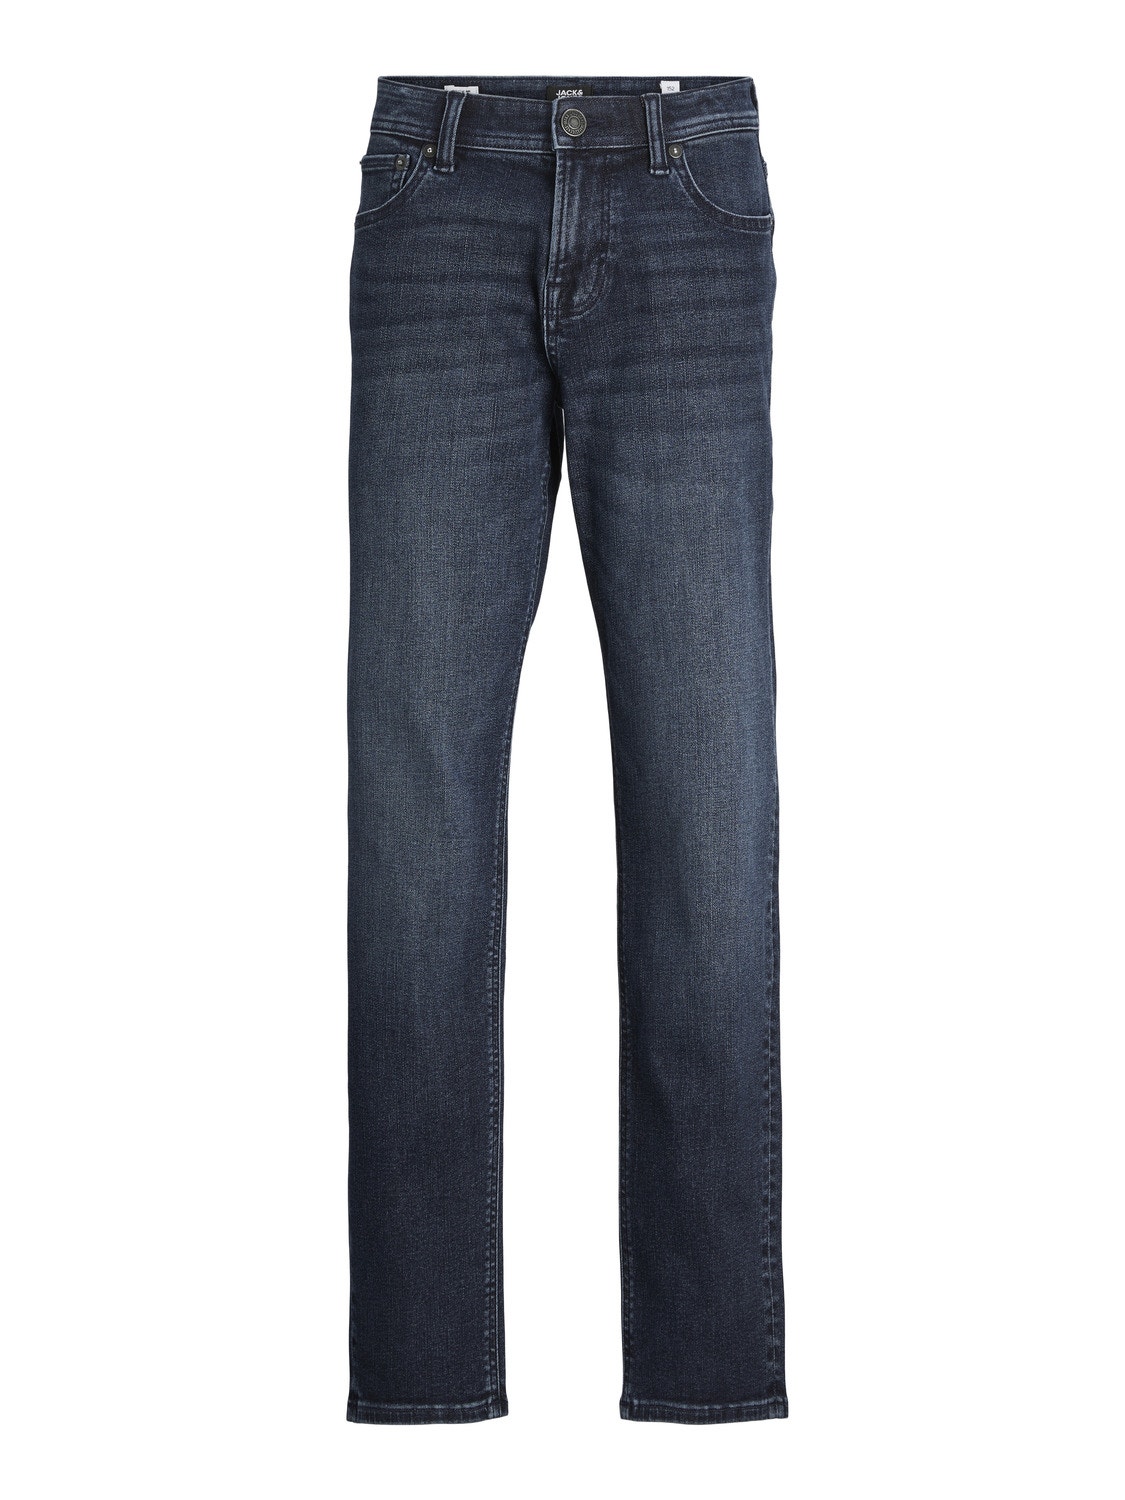 JJICLARK JJORIGINAL SQ 274 Regular fit jeans For boys with 50% discount ...